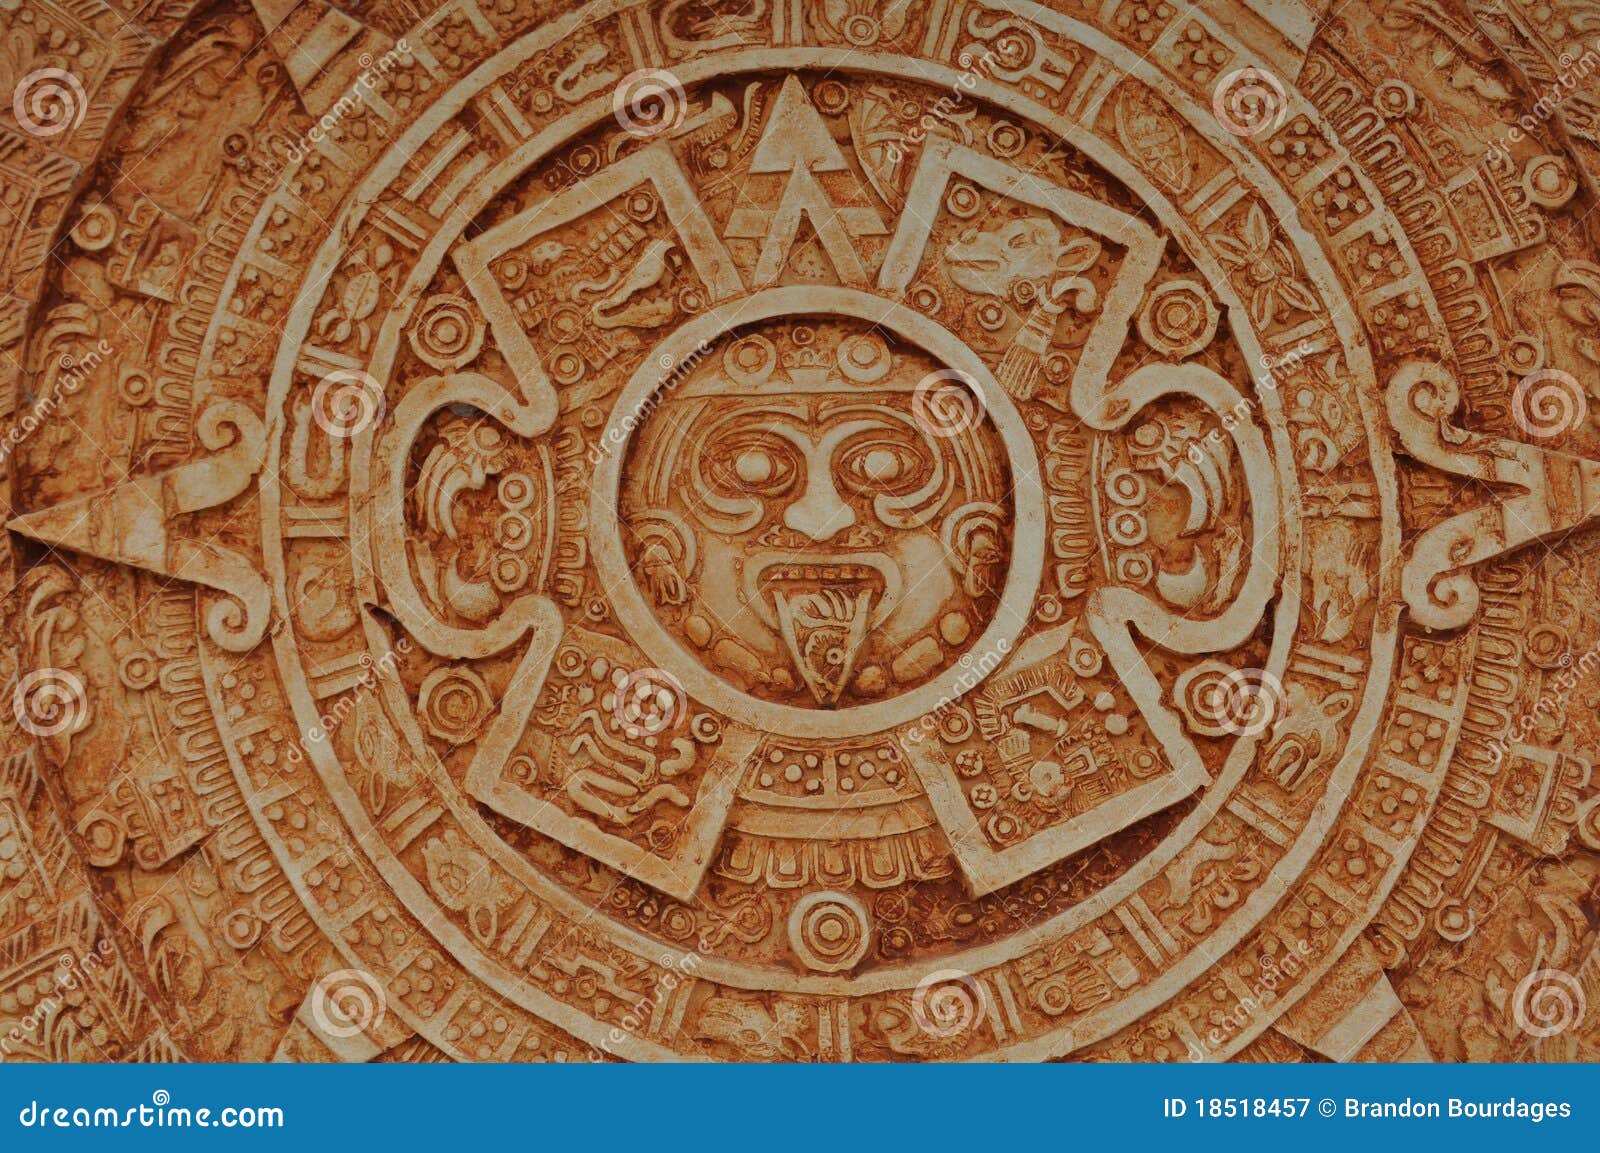 mayan god calendar